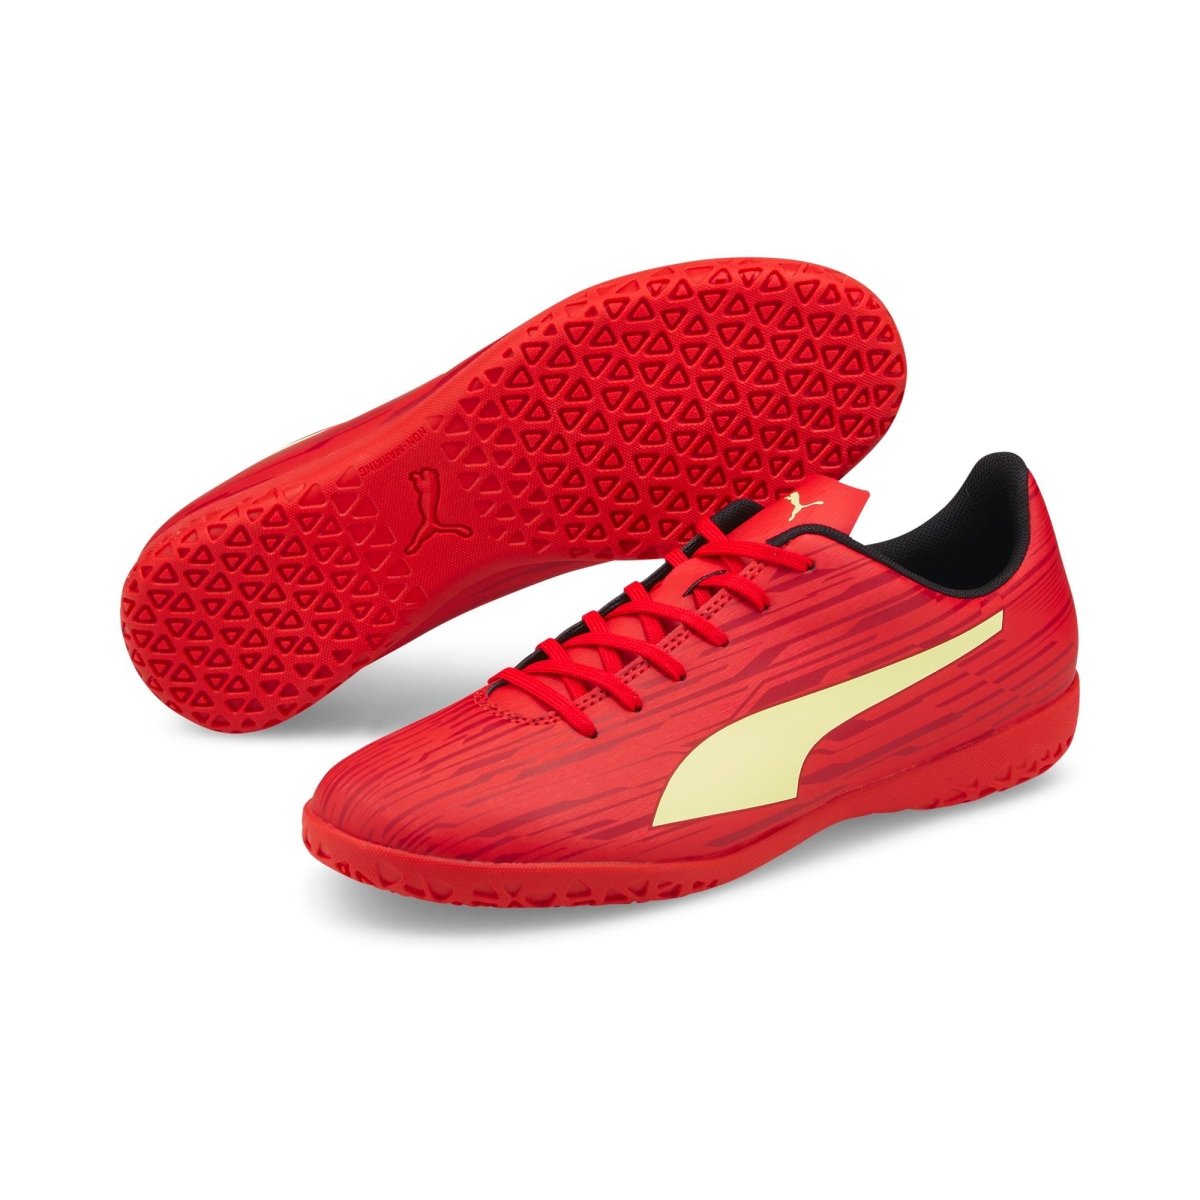 Puma PUMA MEN'S RAPIDO RED/YELLOW FOOTBALL BOOTS - INSPORT